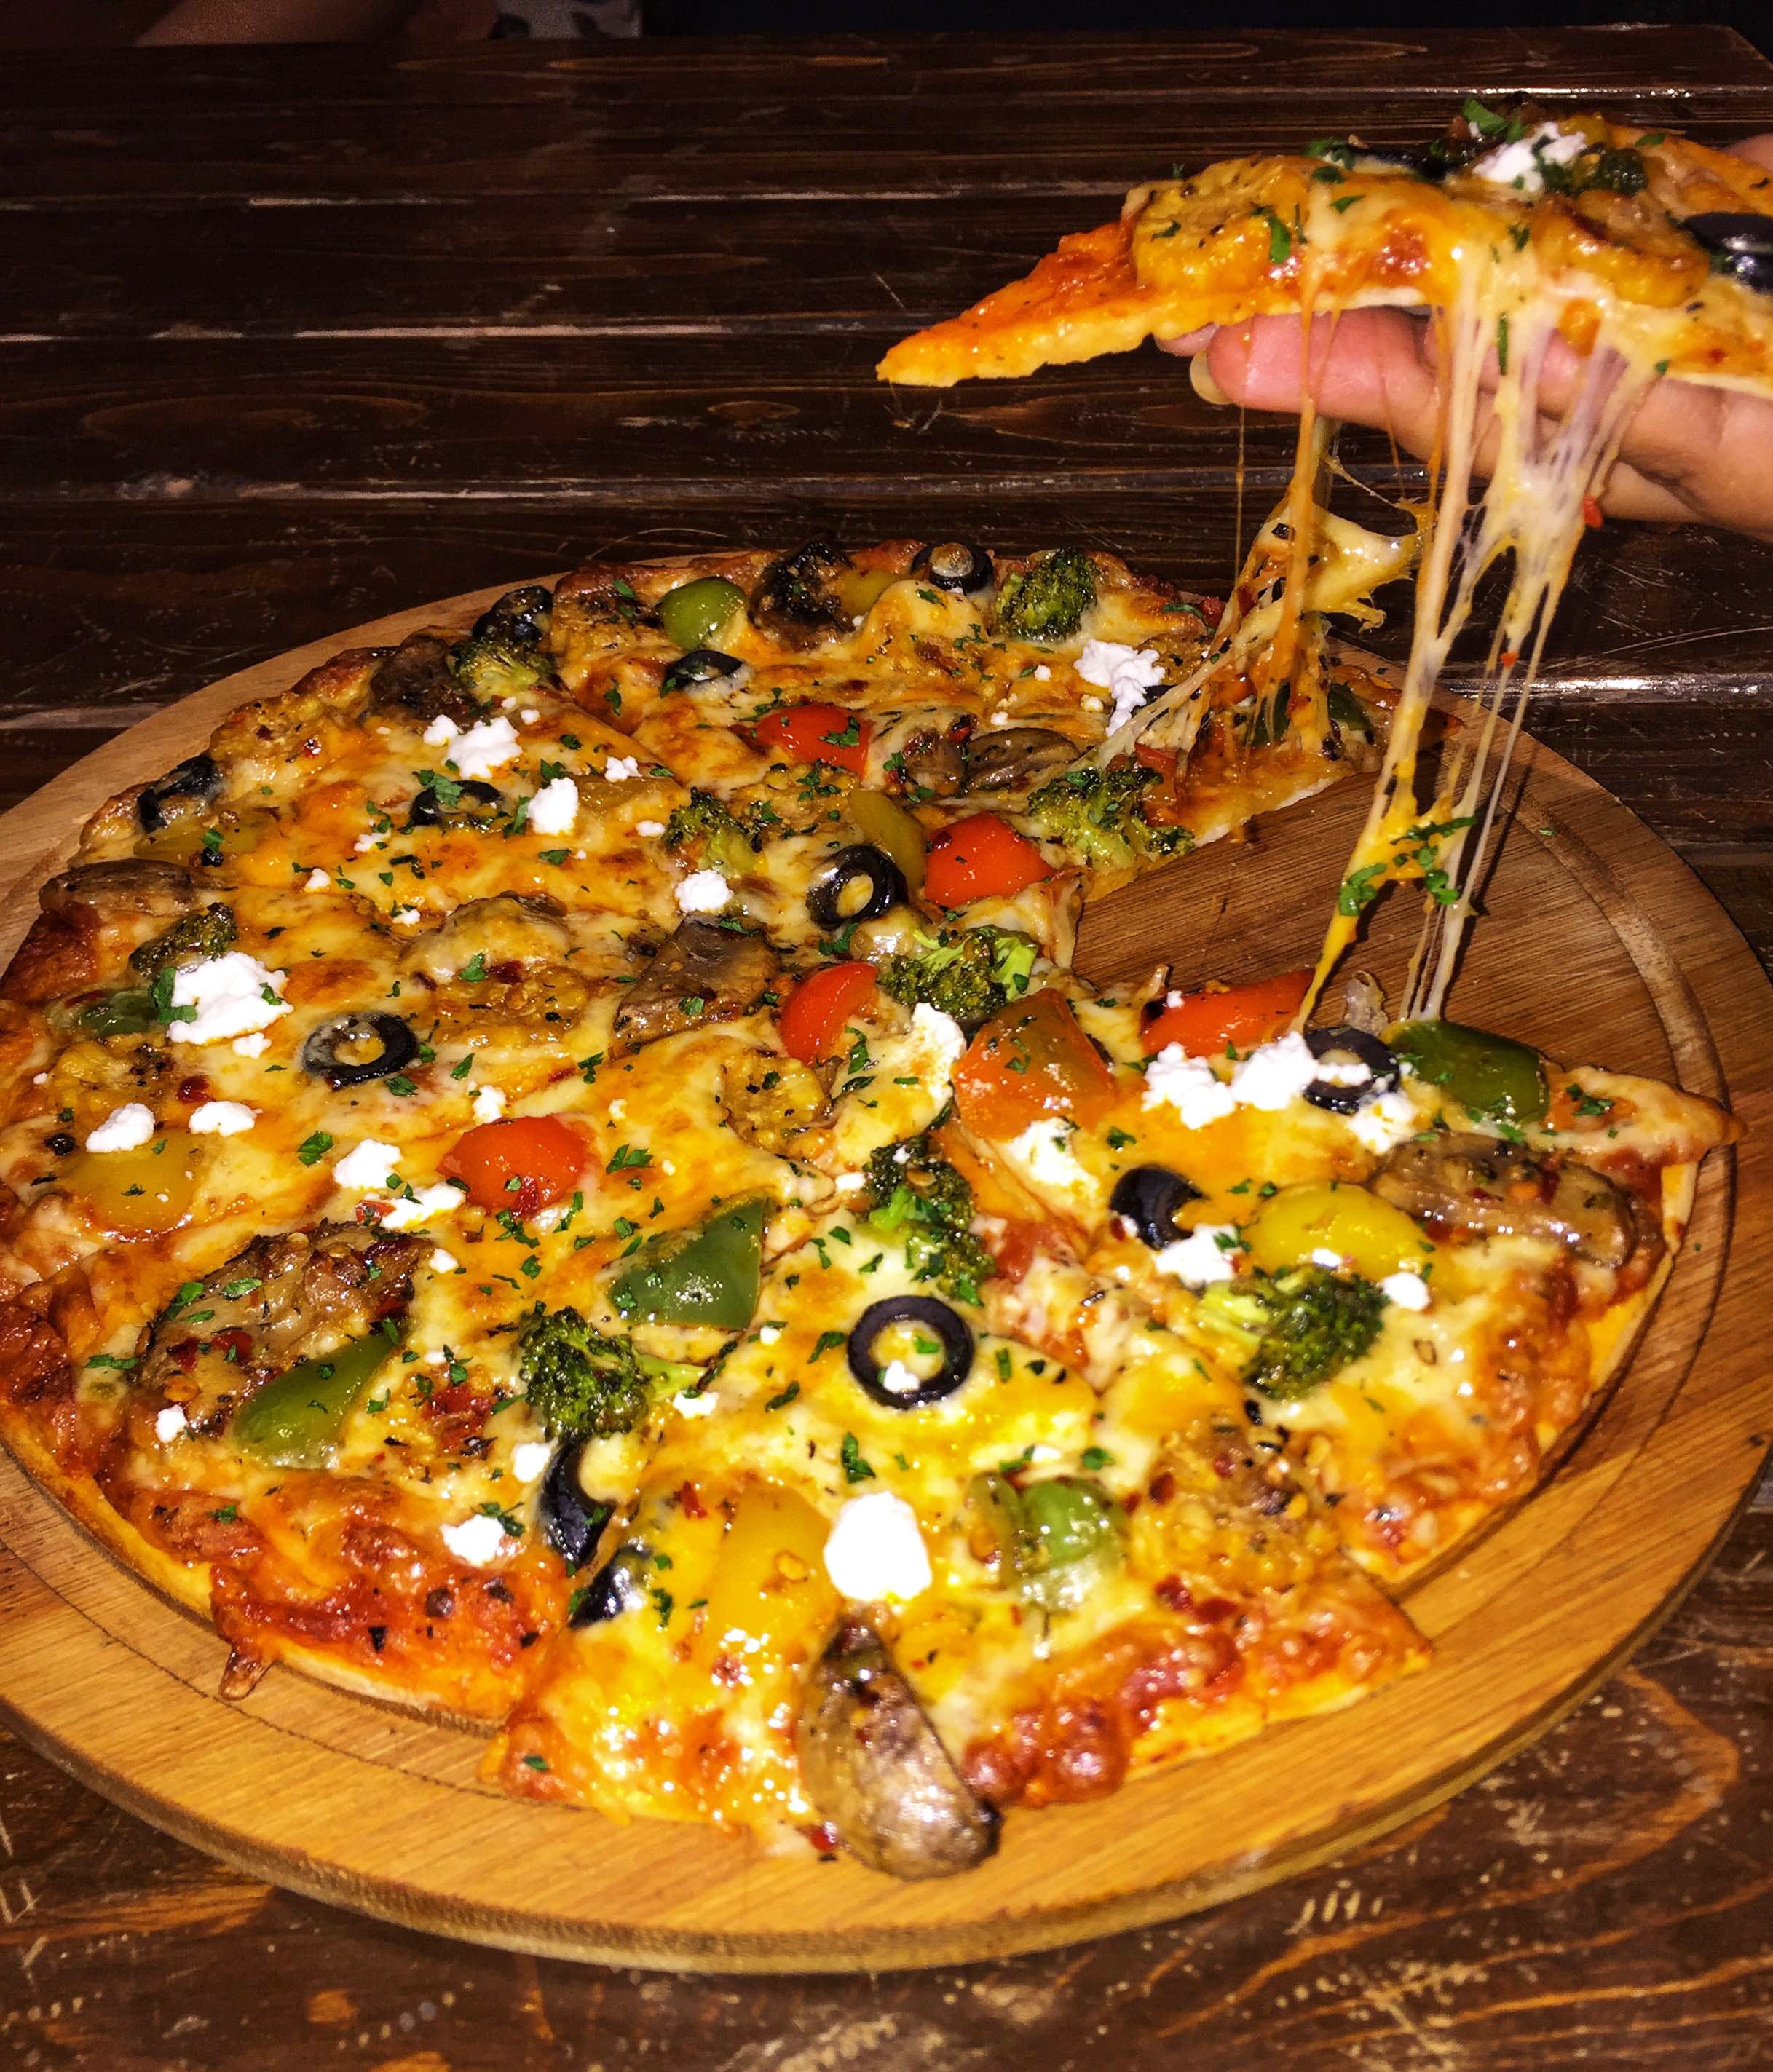 Dish,Food,Cuisine,Pizza,California-style pizza,Pizza cheese,Ingredient,Garnish,Italian food,Recipe